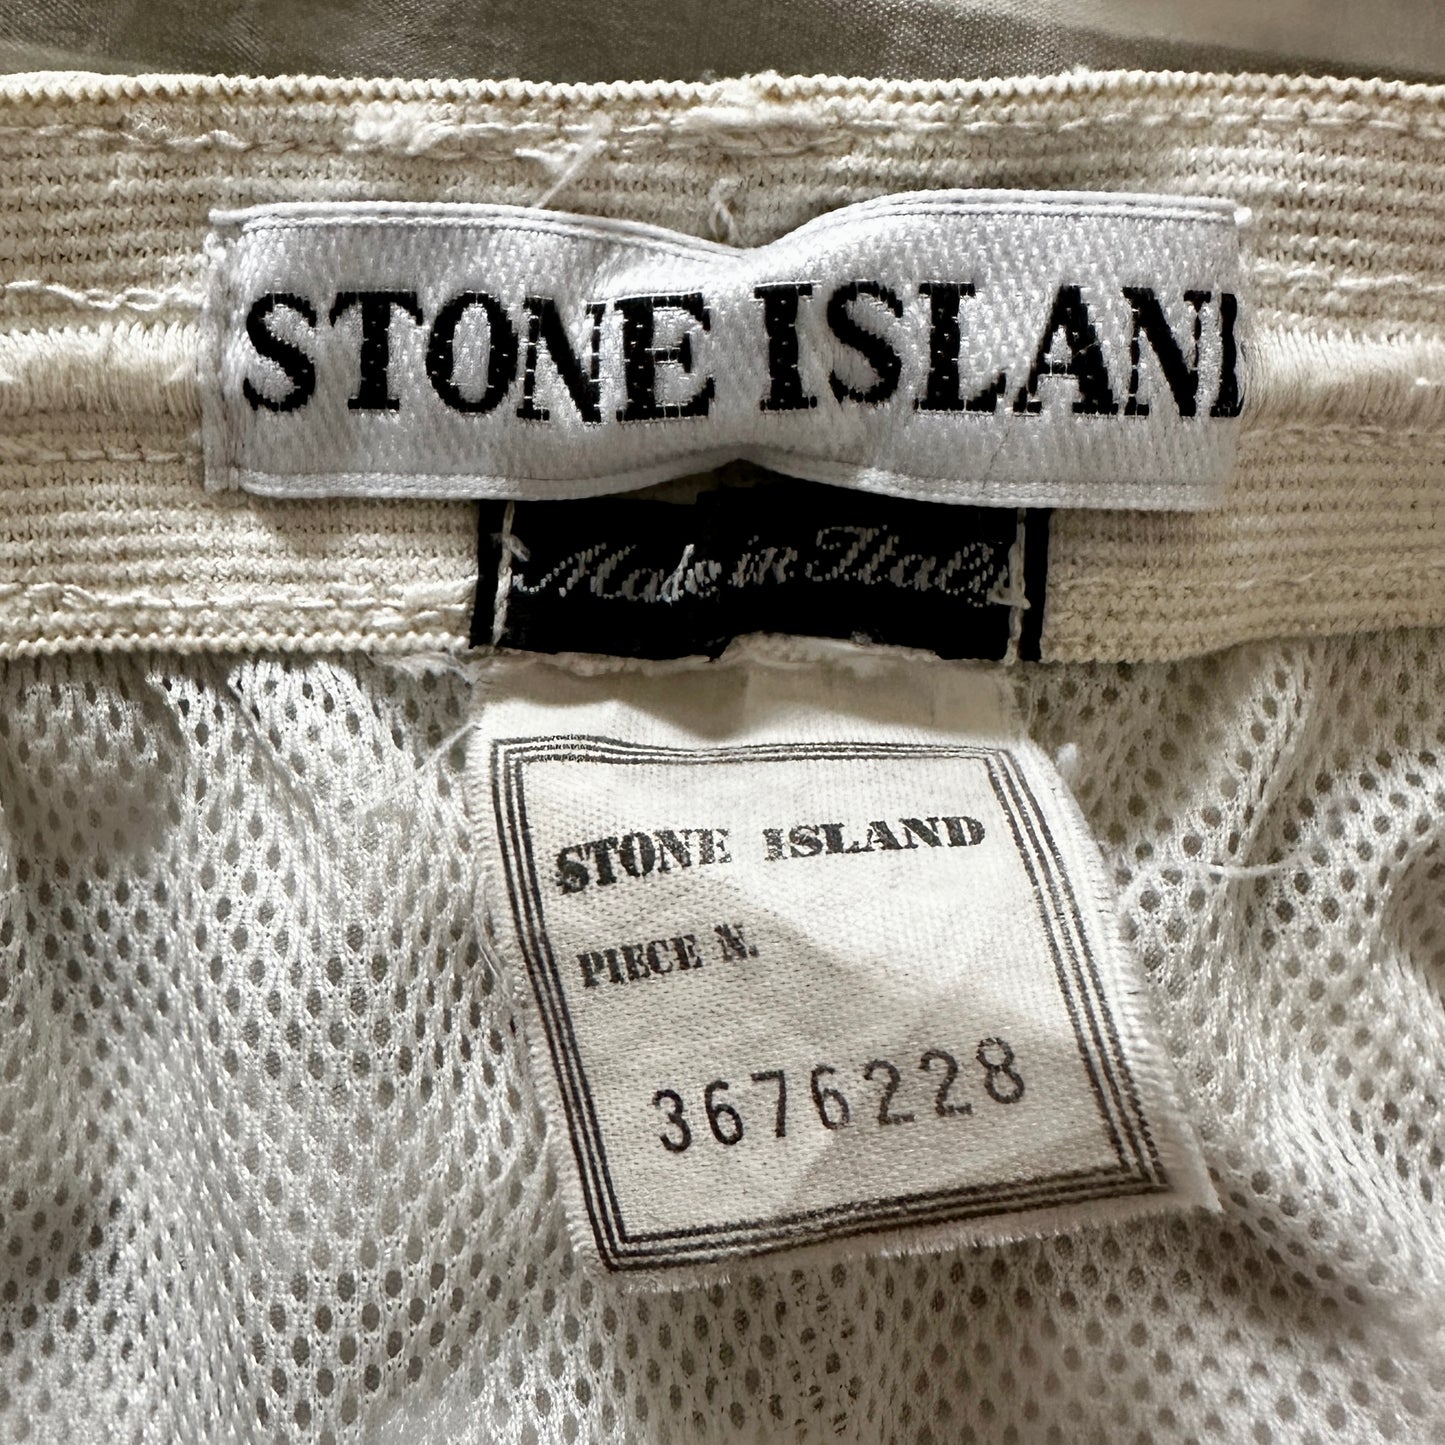 Stone Island 1997 Vintage Swim Shorts - 50 / M - Made in Italy